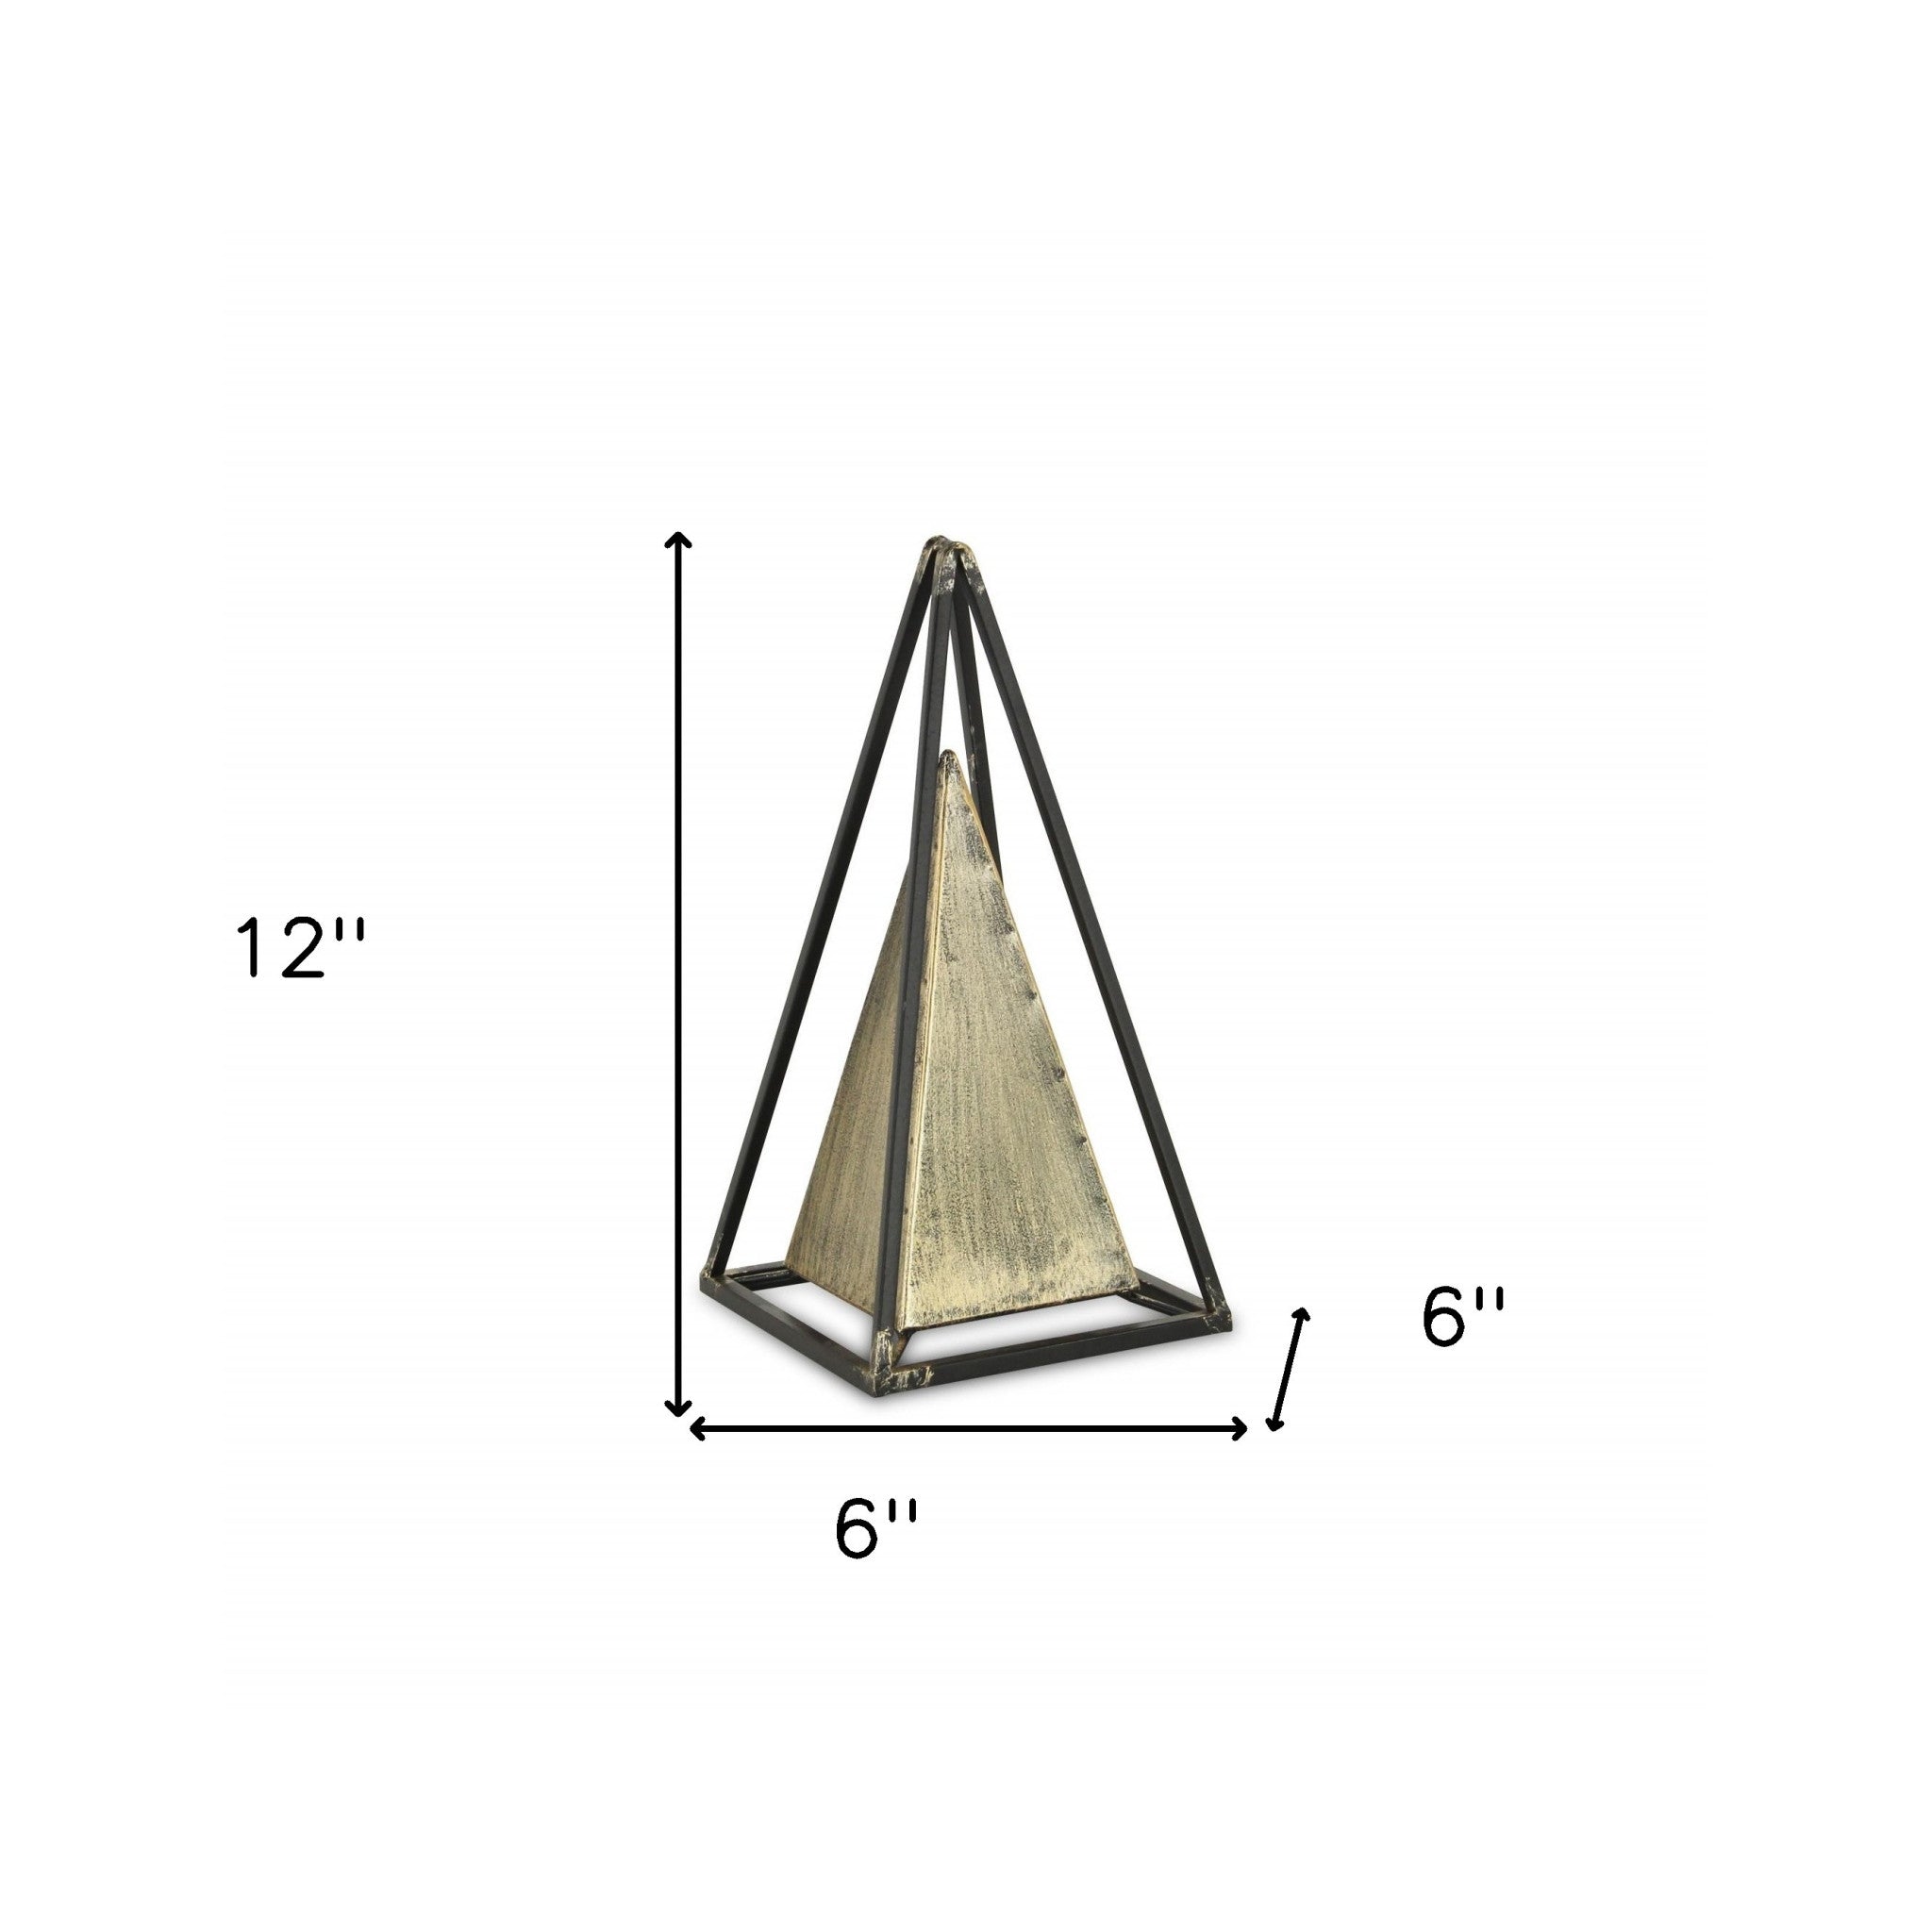 Narrow Metal Triangular Decorative Sculpture